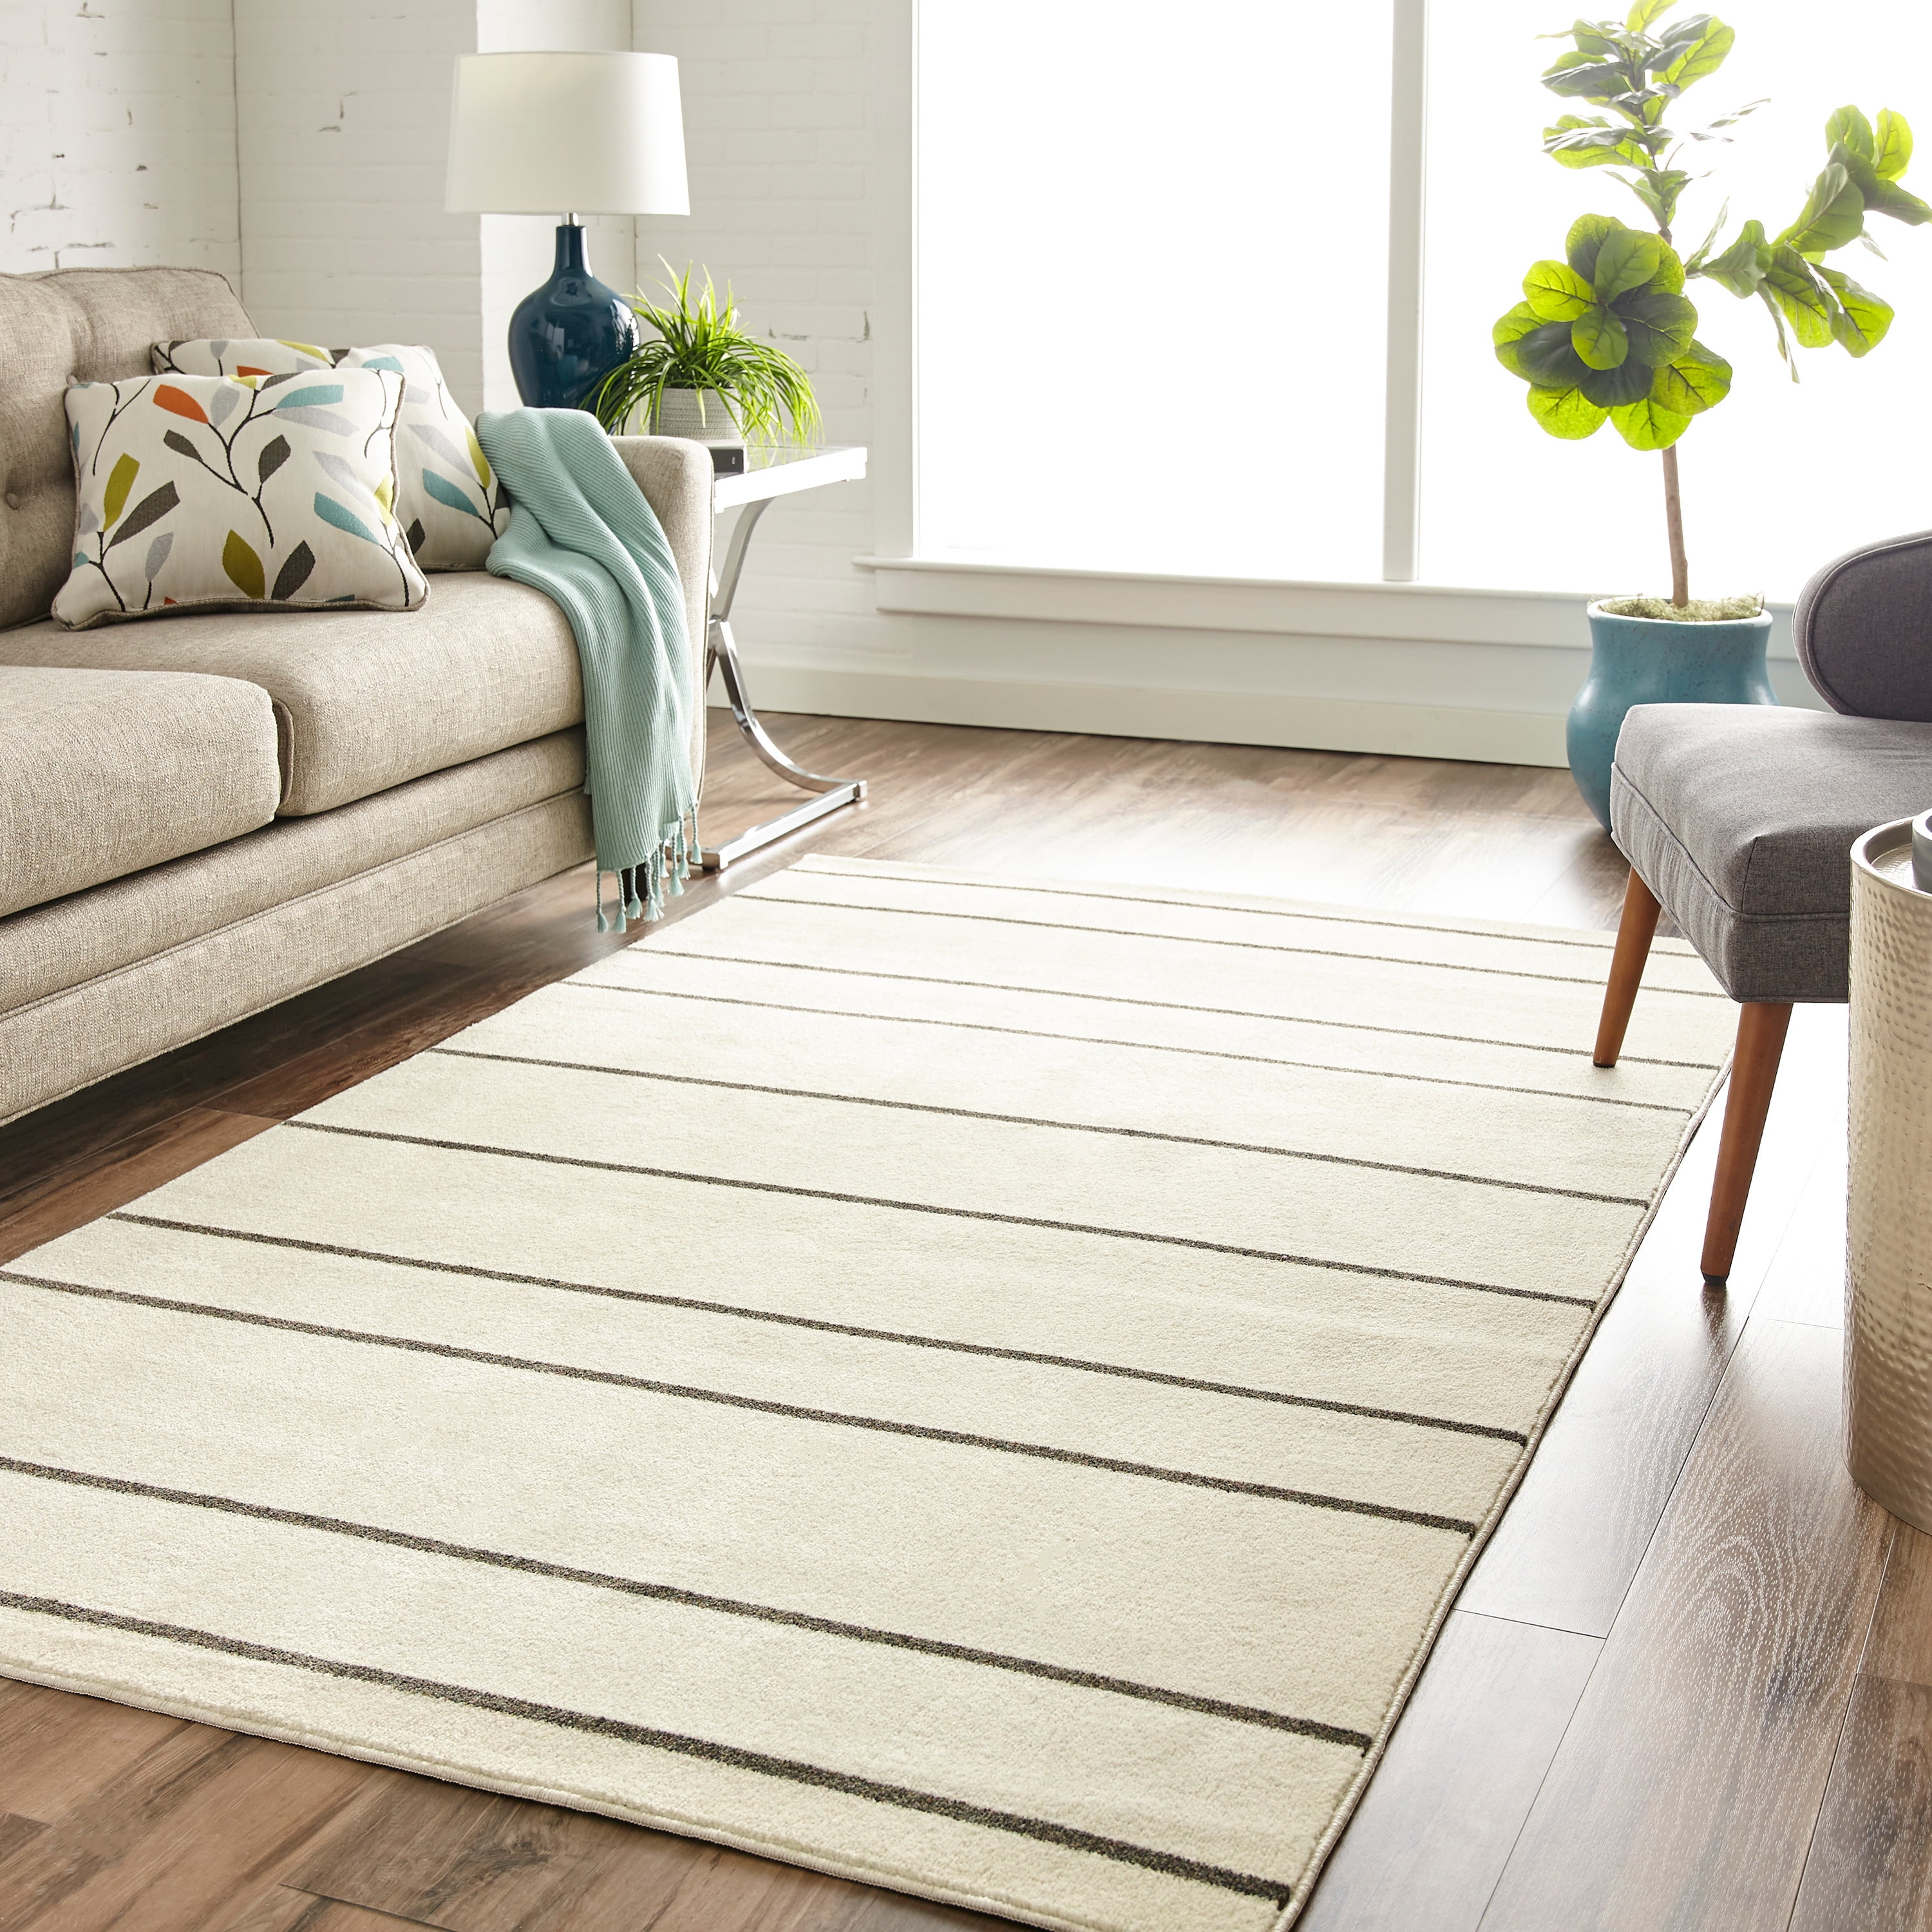 Pink Rose Hydrangea 3D Printing Super Soft Personalized Carpet Decorator Floor Rug Carpets 84 X 60 Inch